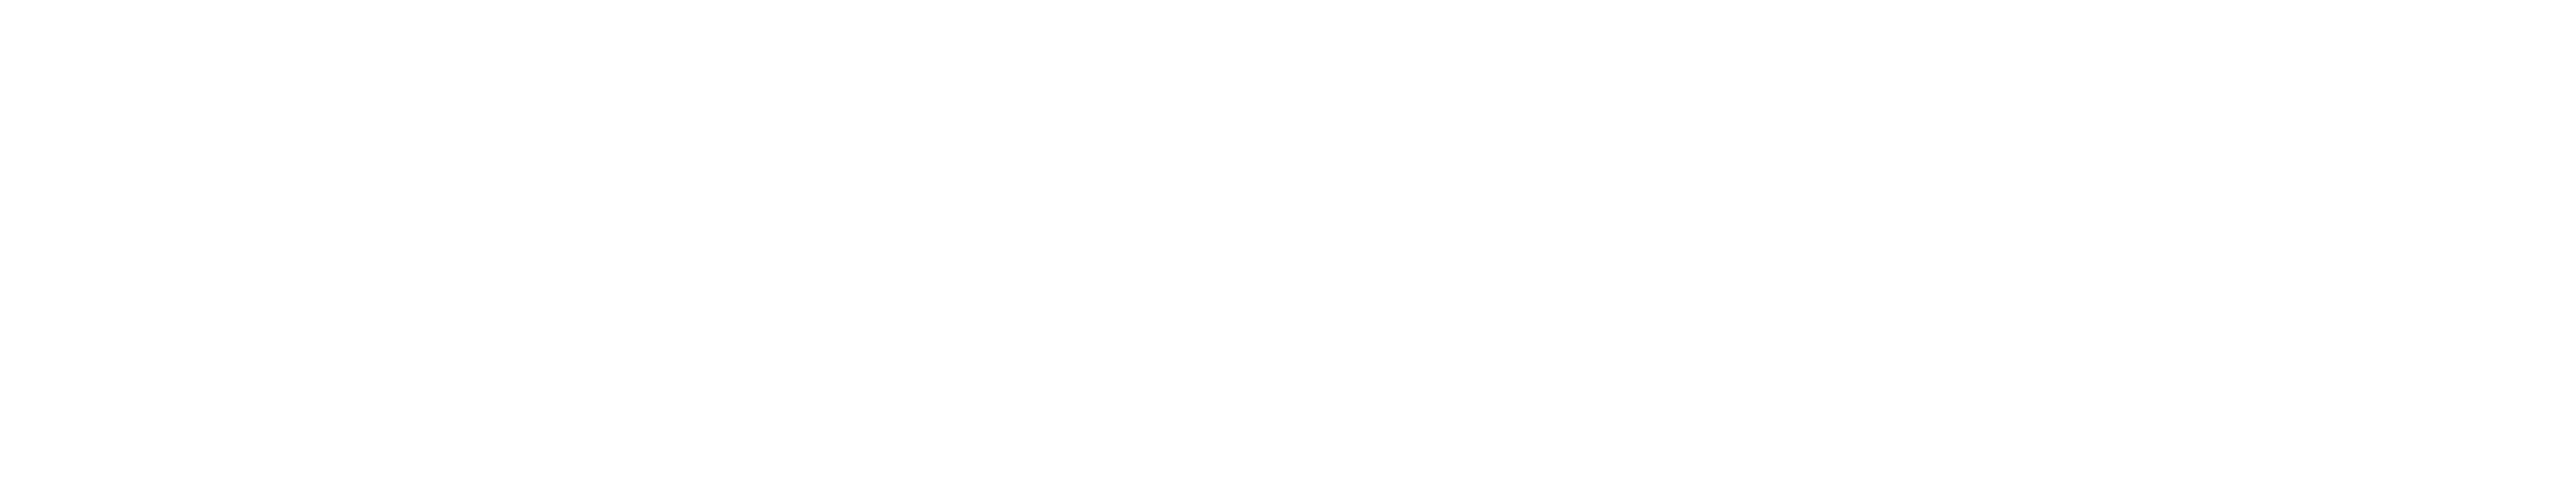 Greater Portland Bible Church